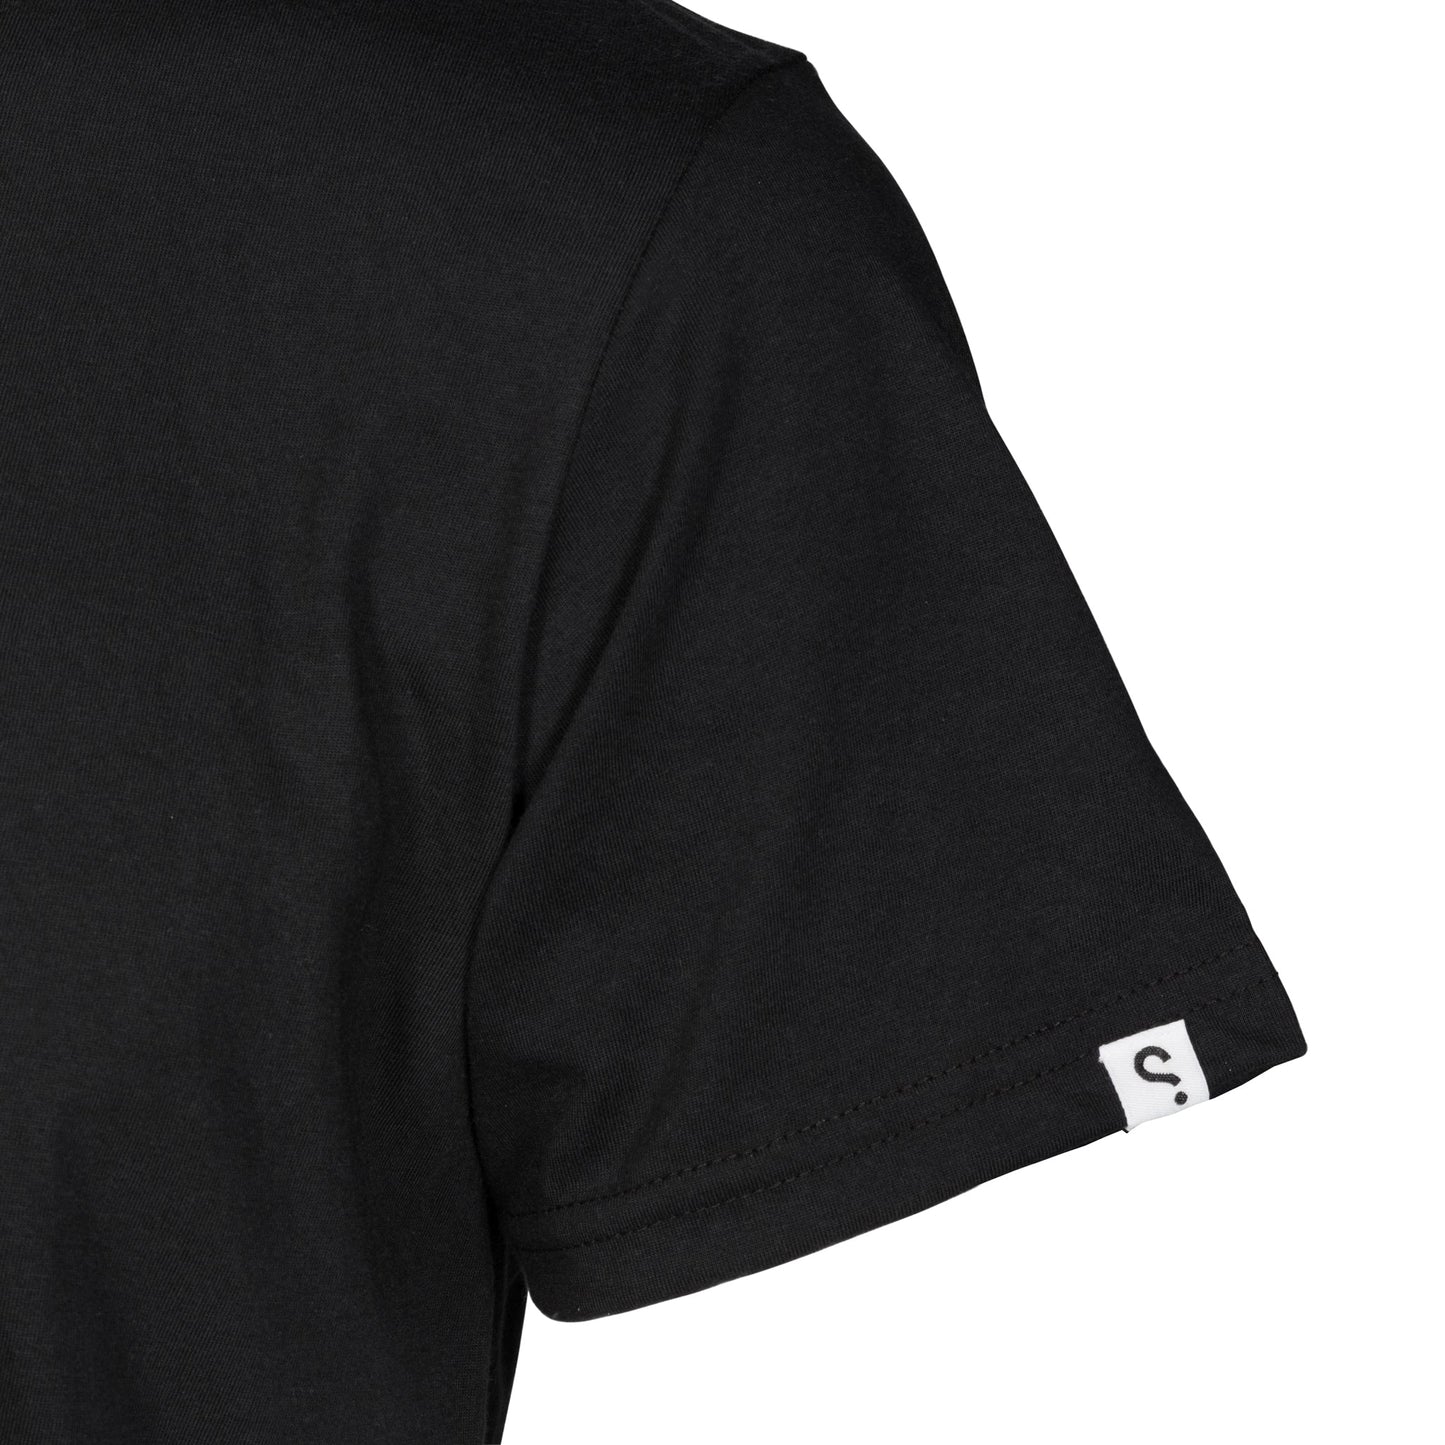 SPYSCAPE Hacker T- Shirt with Hidden Zip Pocket - logo sleeve tag 